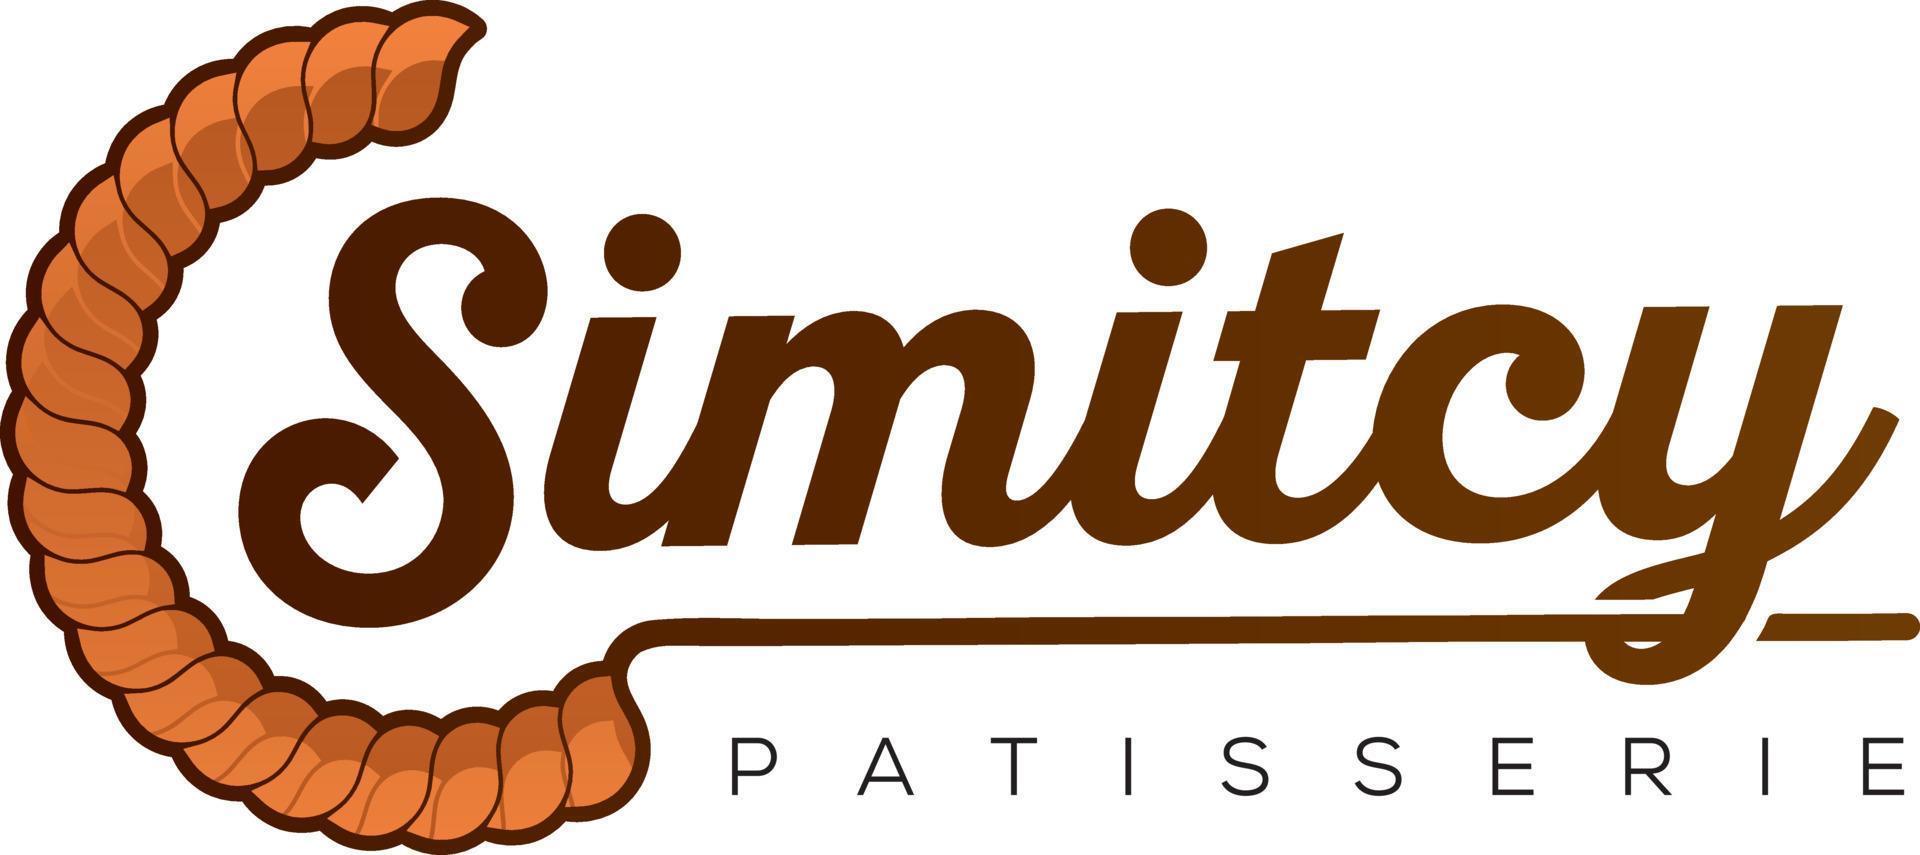 Patisserie Logo Design Template vector